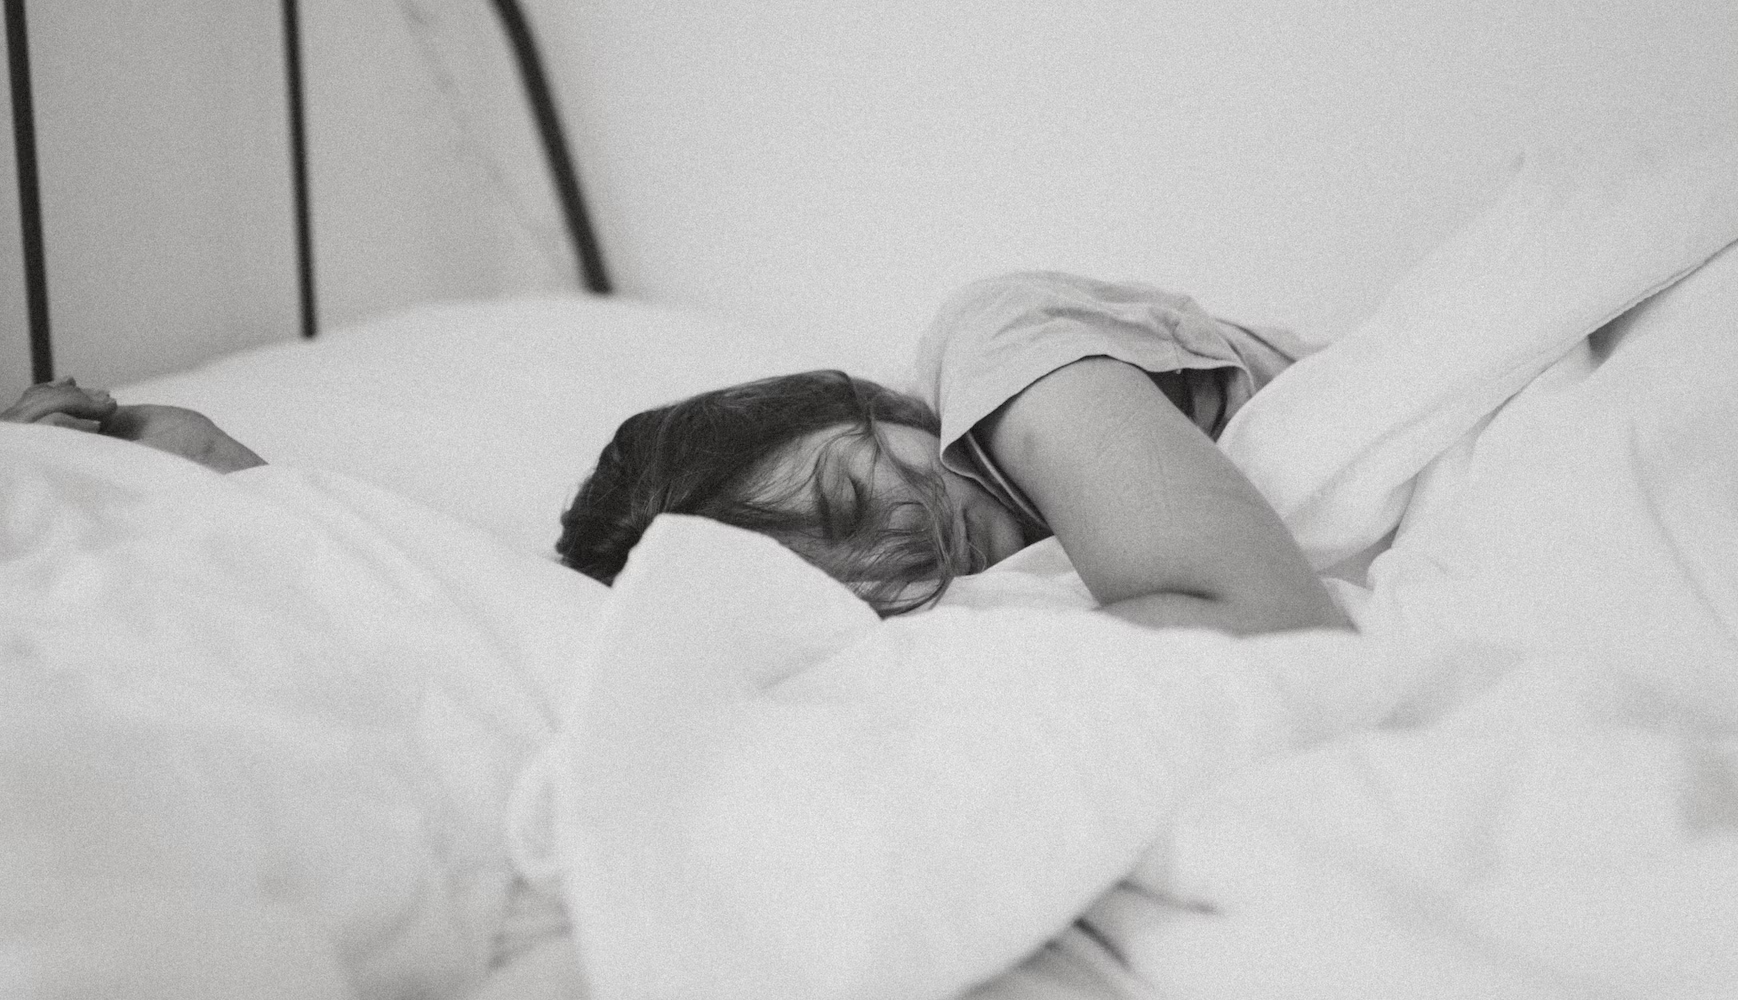 Bidirectional associations between sleep and stress in everyday life